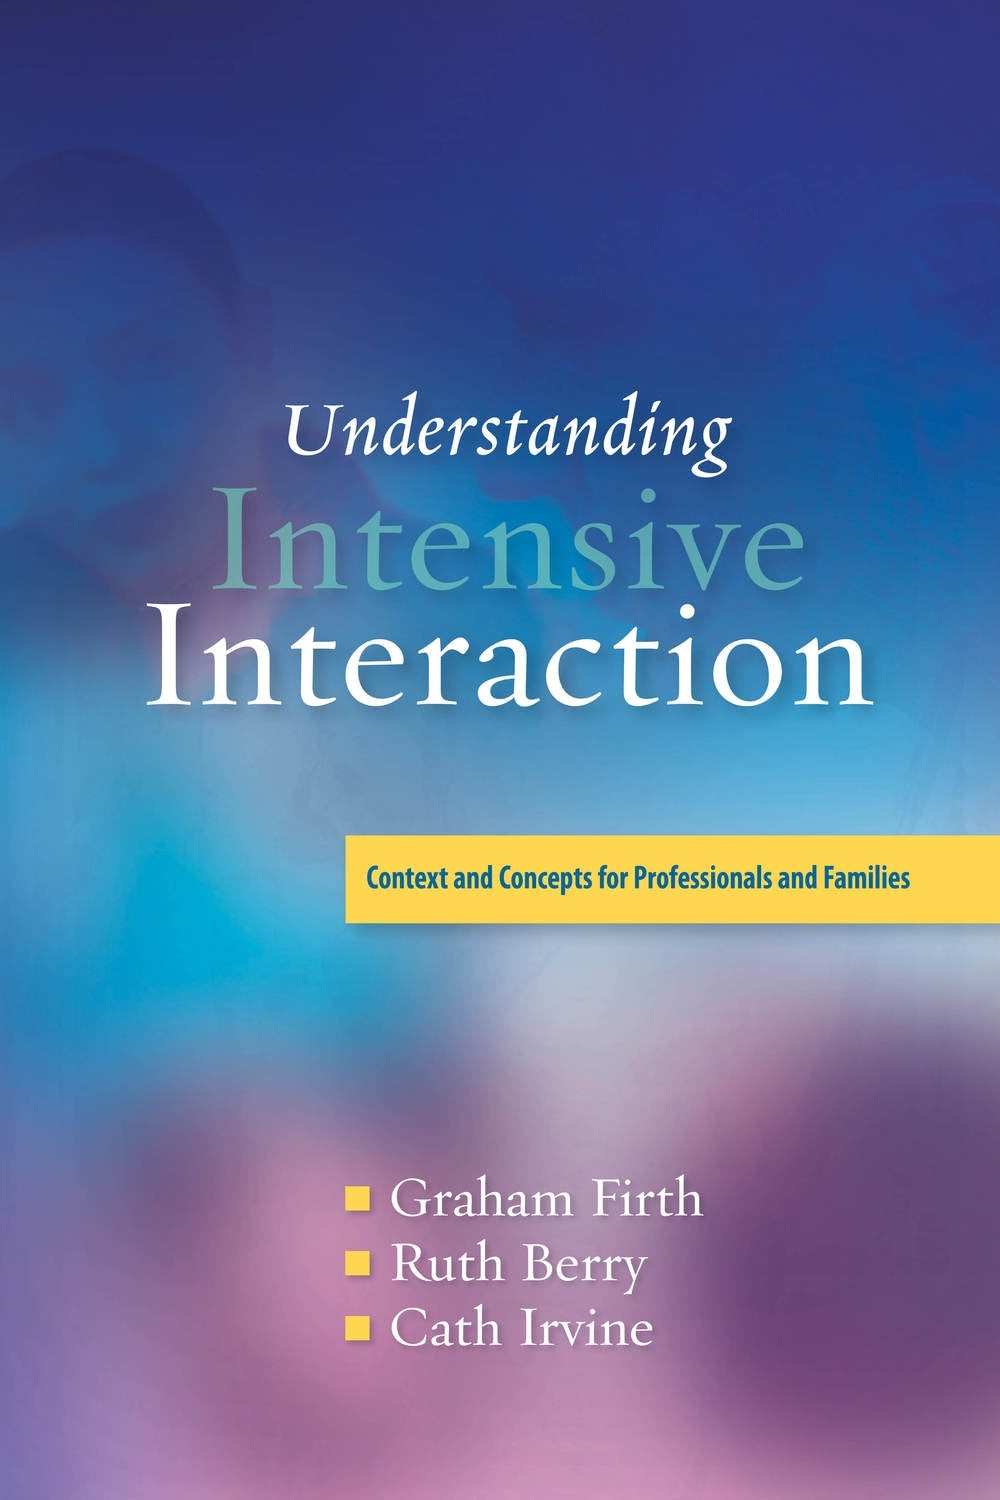 Understanding Intensive Interaction by Dave Hewett, Ruth Berry, Graham Firth, Cath Irvine